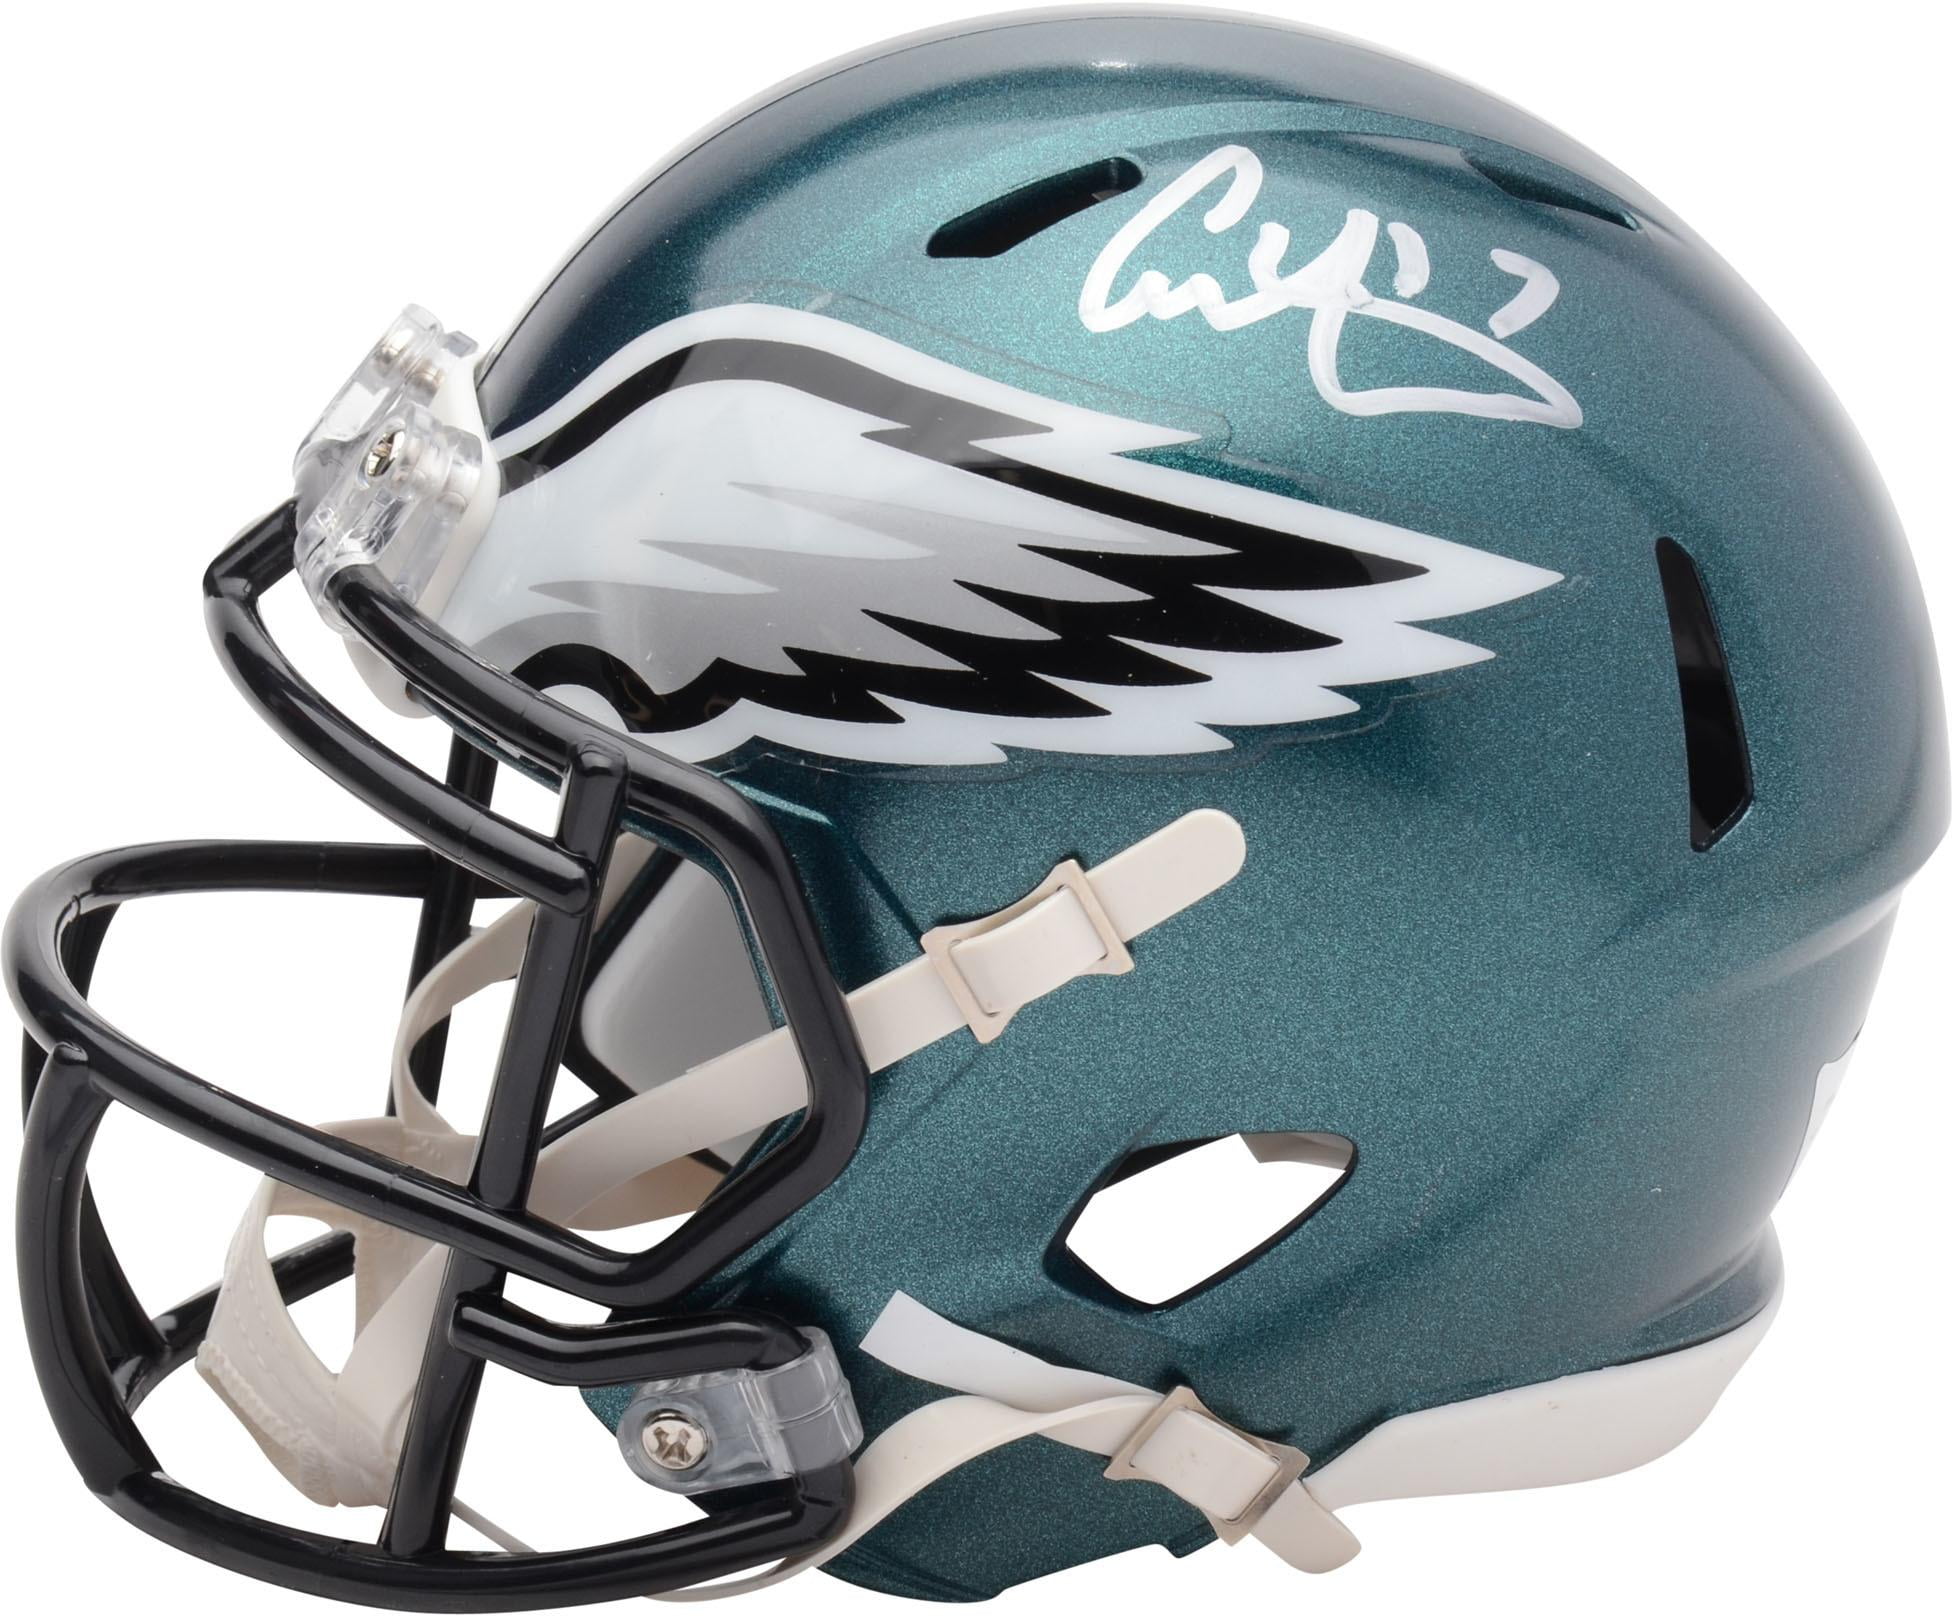 Fanatics Authentic Certified Alshon Jeffery Philadelphia Eagles Autographed Mini Helmet Signed on Left Side